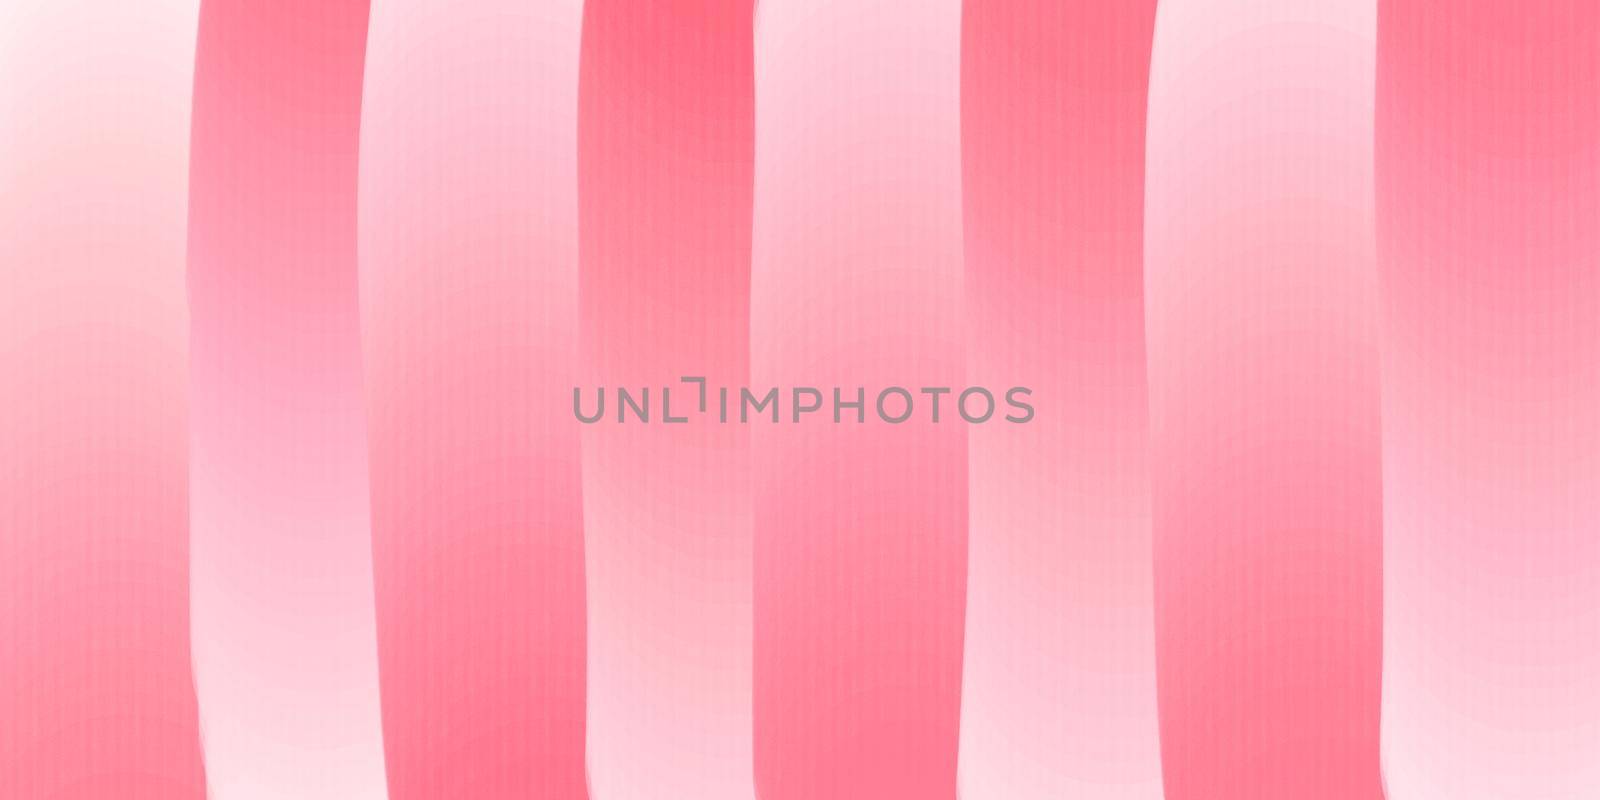 illustration imitation of vertical watercolor pink stripes